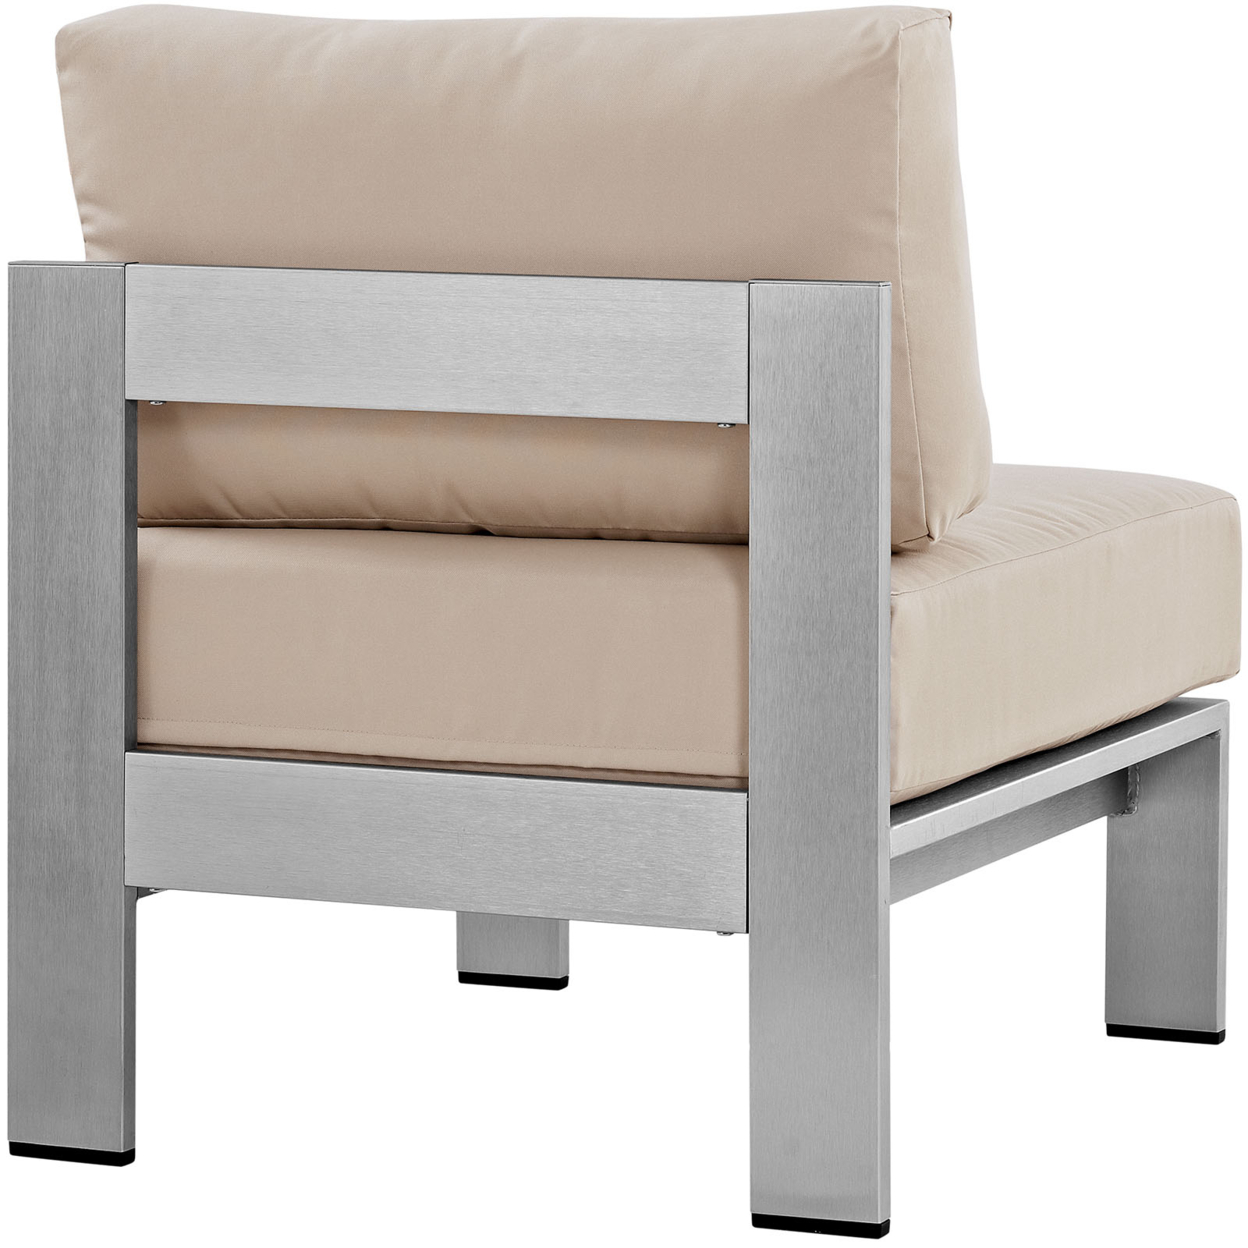 Silver Beige Shore Armless Outdoor Patio Aluminum Chair